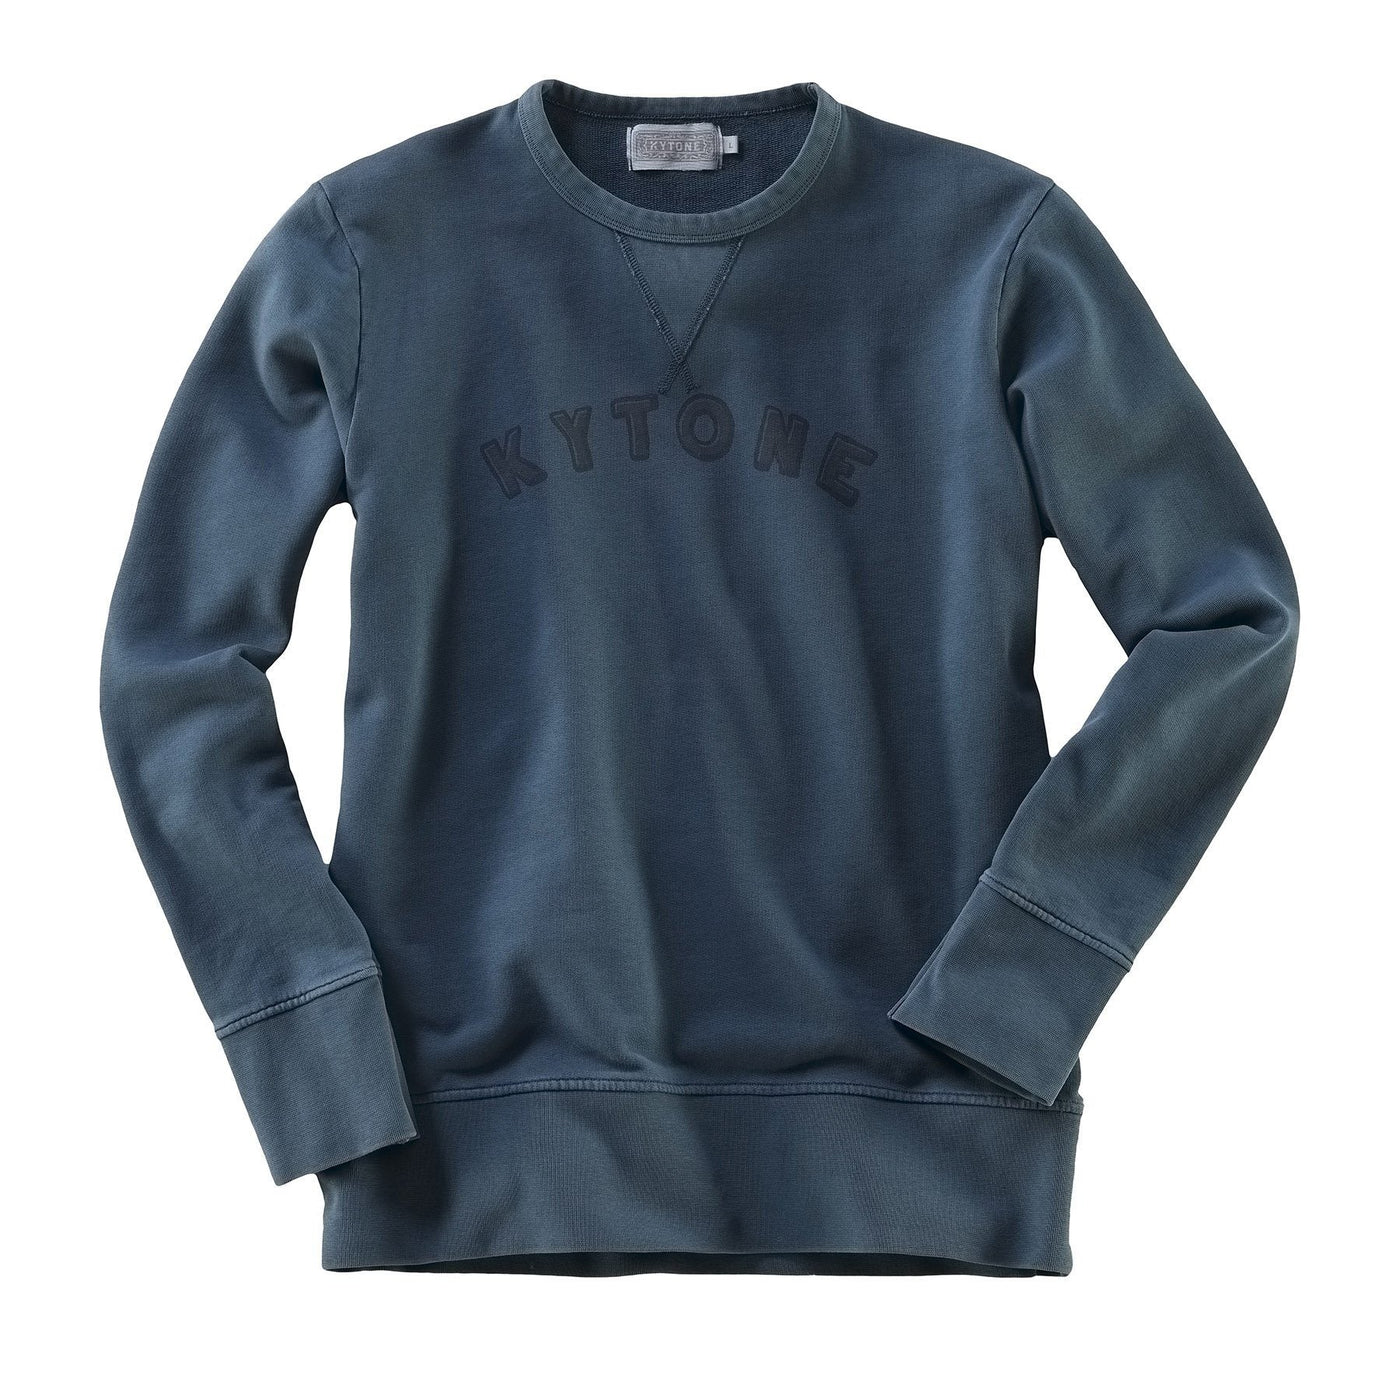 Kytone Sweater One